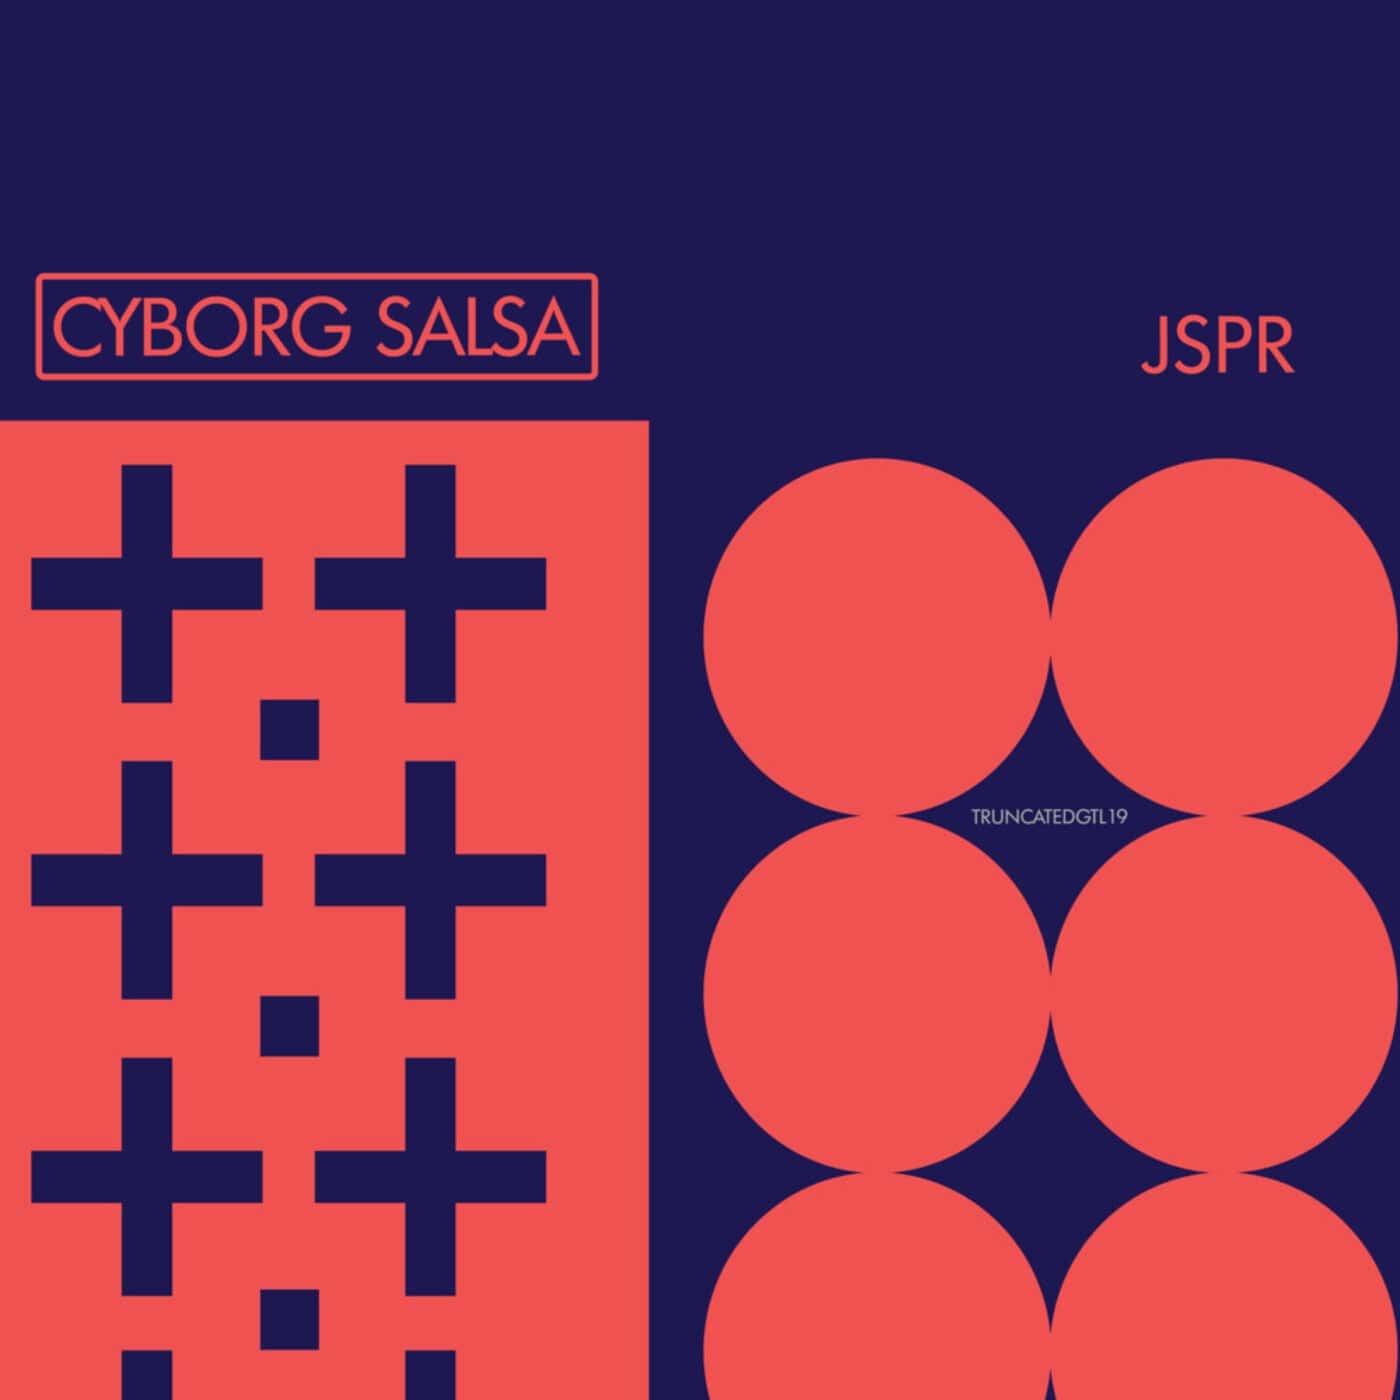 Download JSPR - Cyborg Salsa on Electrobuzz